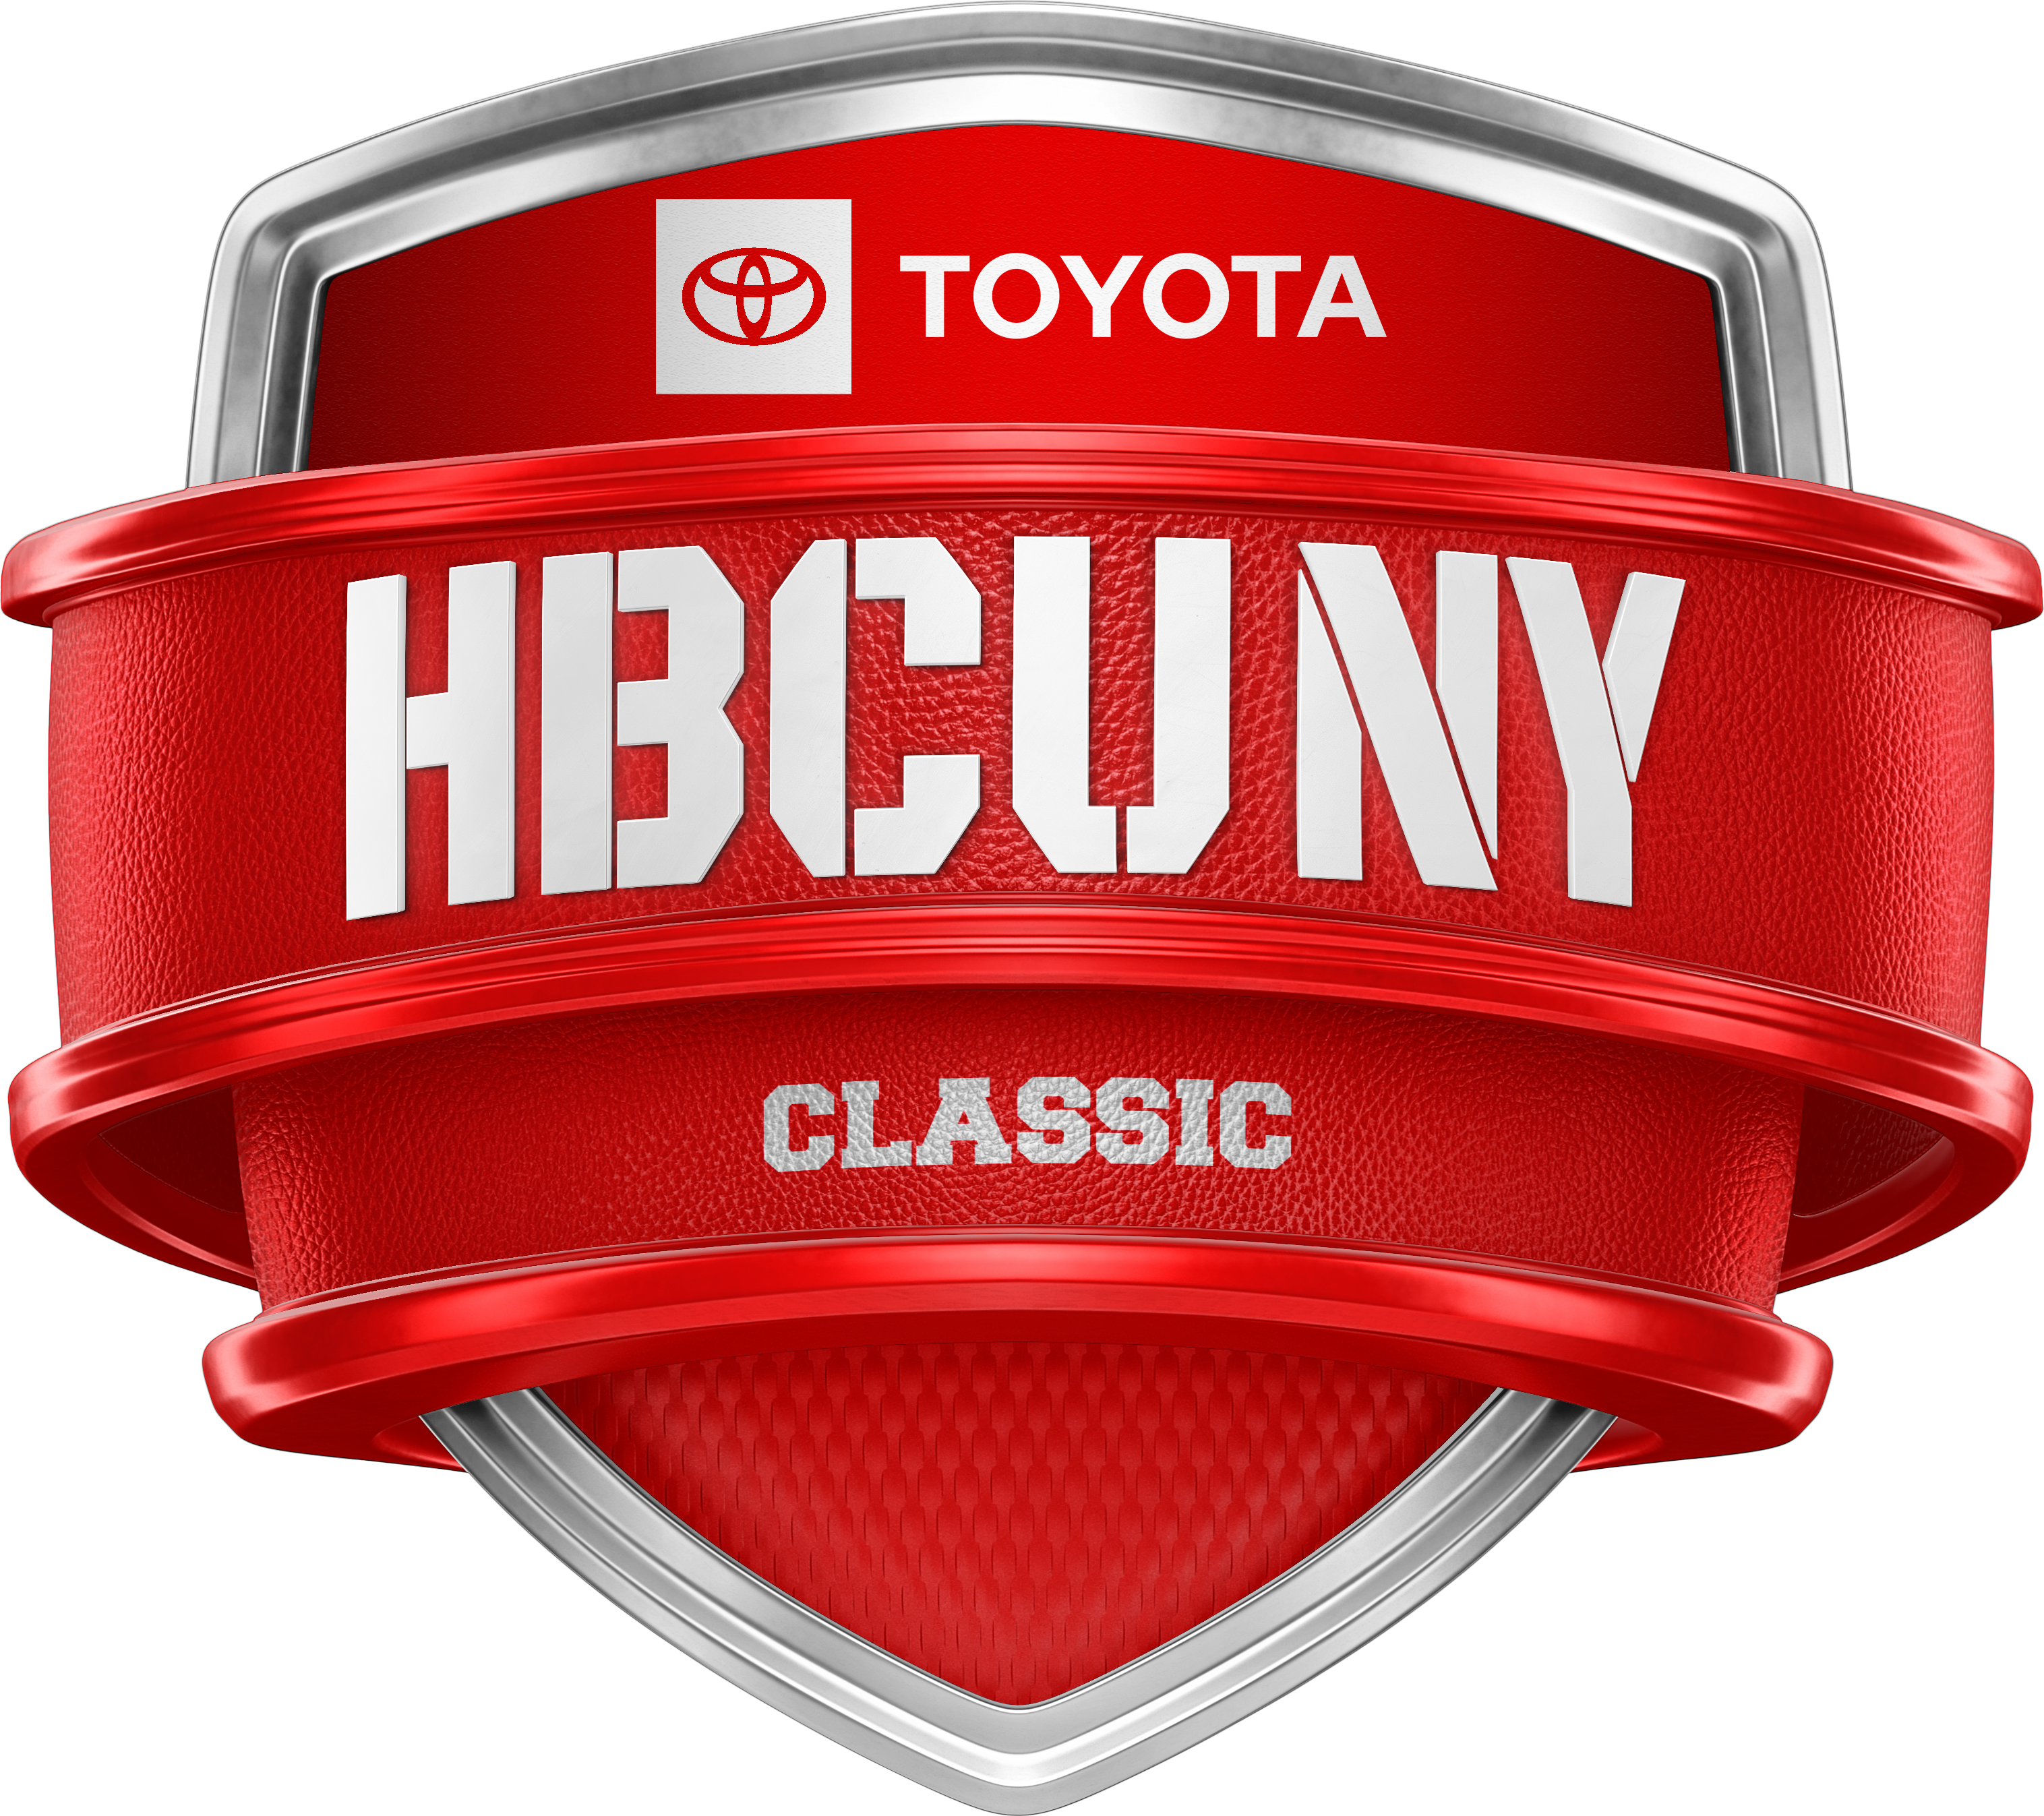 Toyota HBCUNY Classic Logo